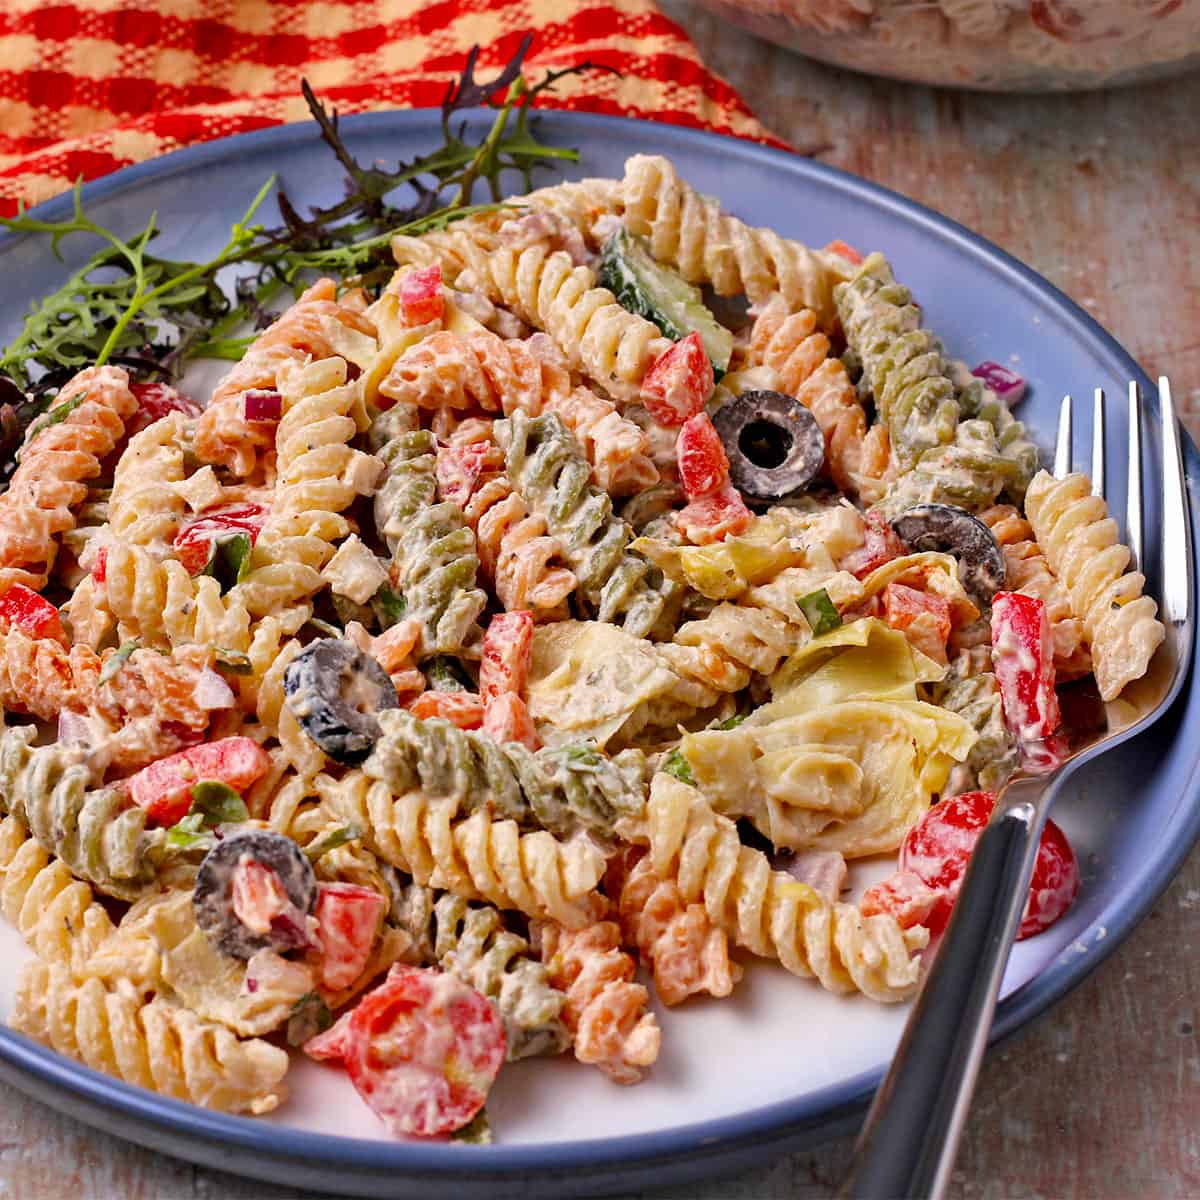 A plate of creamy Italian pasta salad.